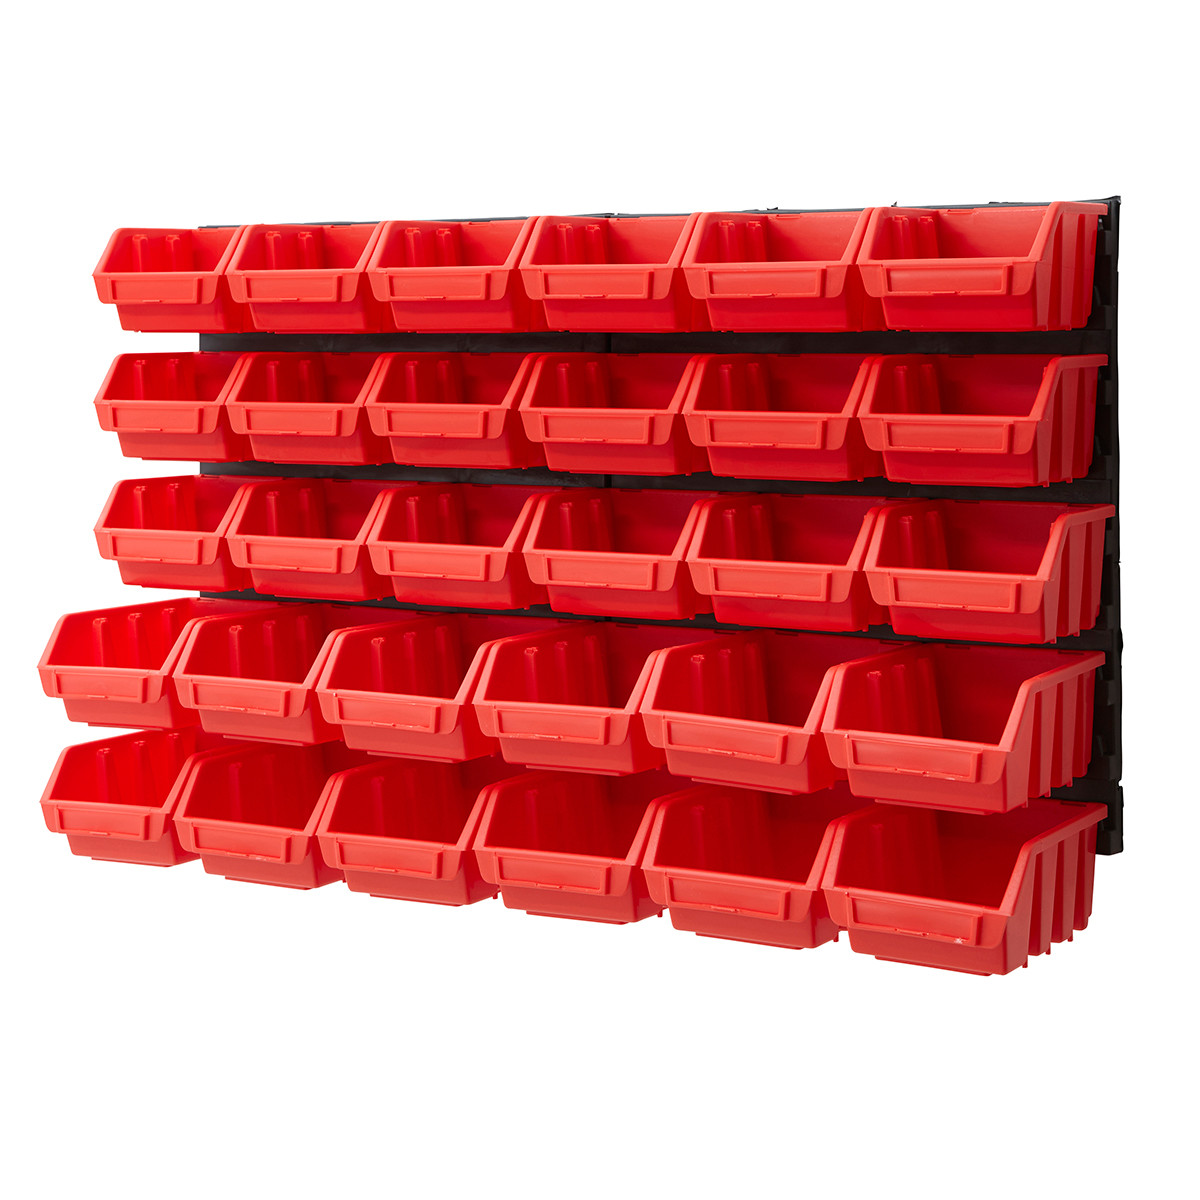 Best ideas about Garage Storage Bins
. Save or Pin Plastic Bin Kit Wall Garage Storage Parts Bins Tool DIY Now.